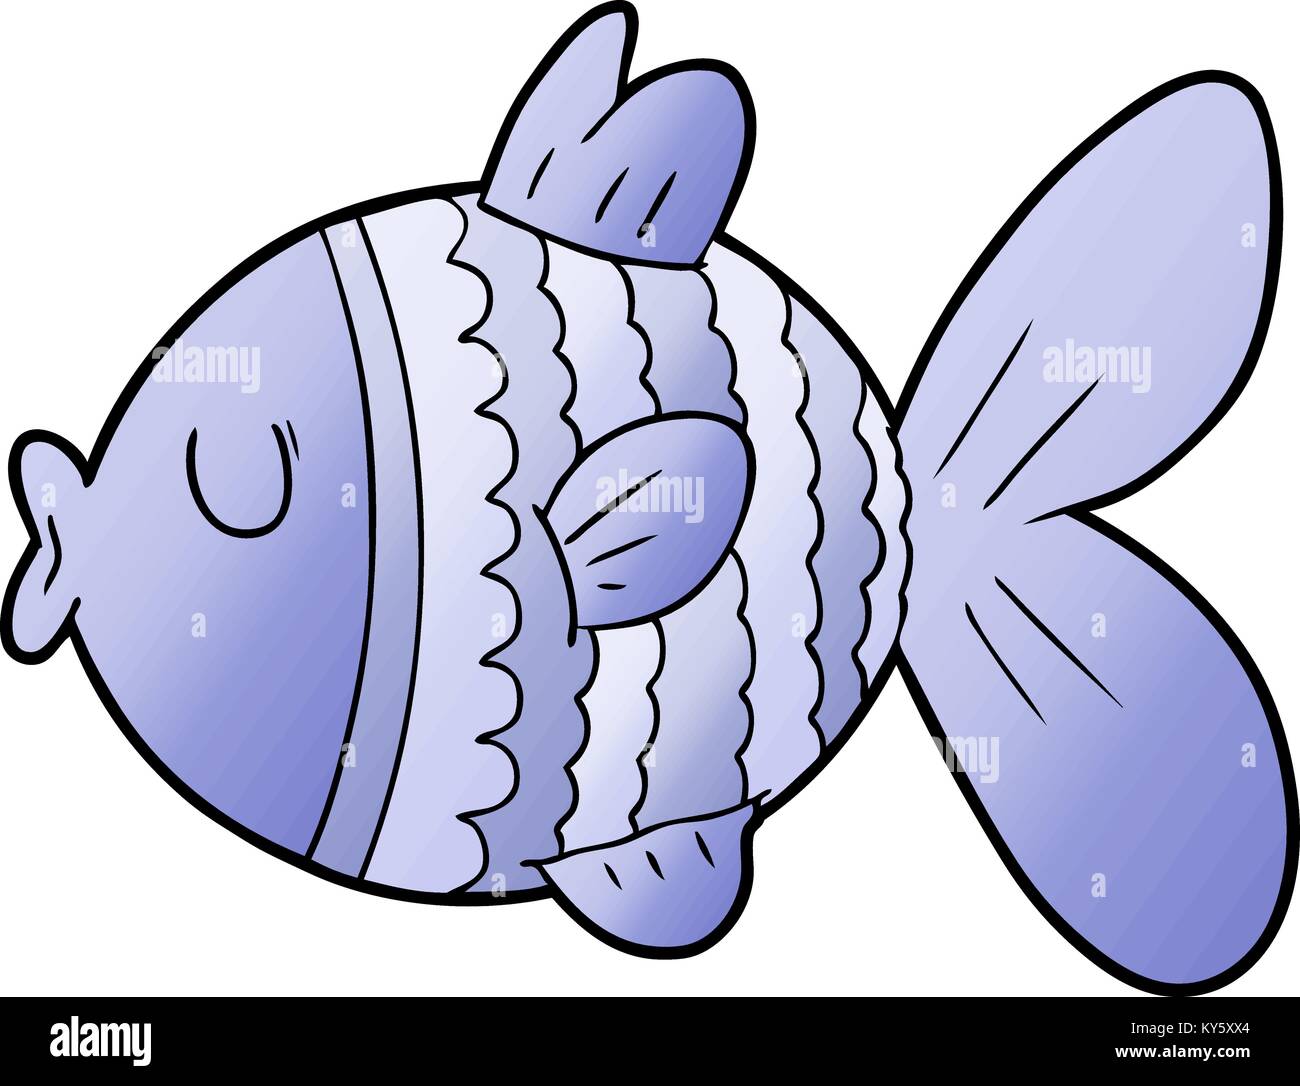 dibujos animados de peces Imagen Vector de stock - Alamy